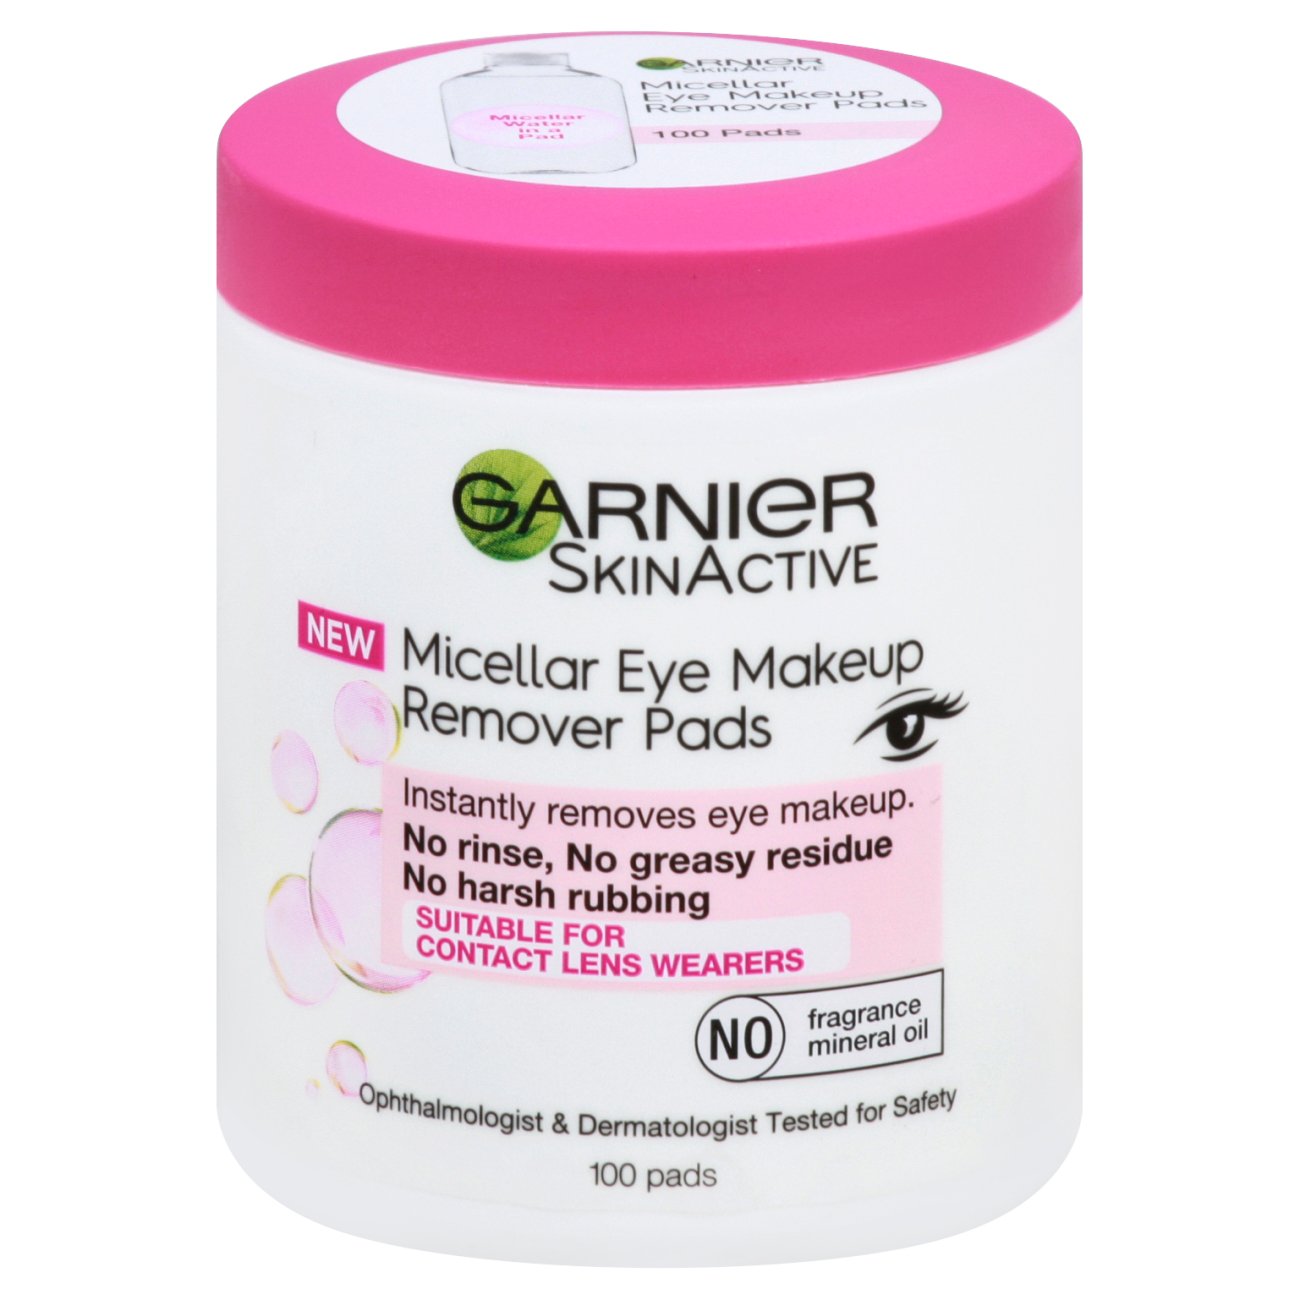 Garnier SkinActive Micellar Eye Makeup Remover Cotton Pads Shop